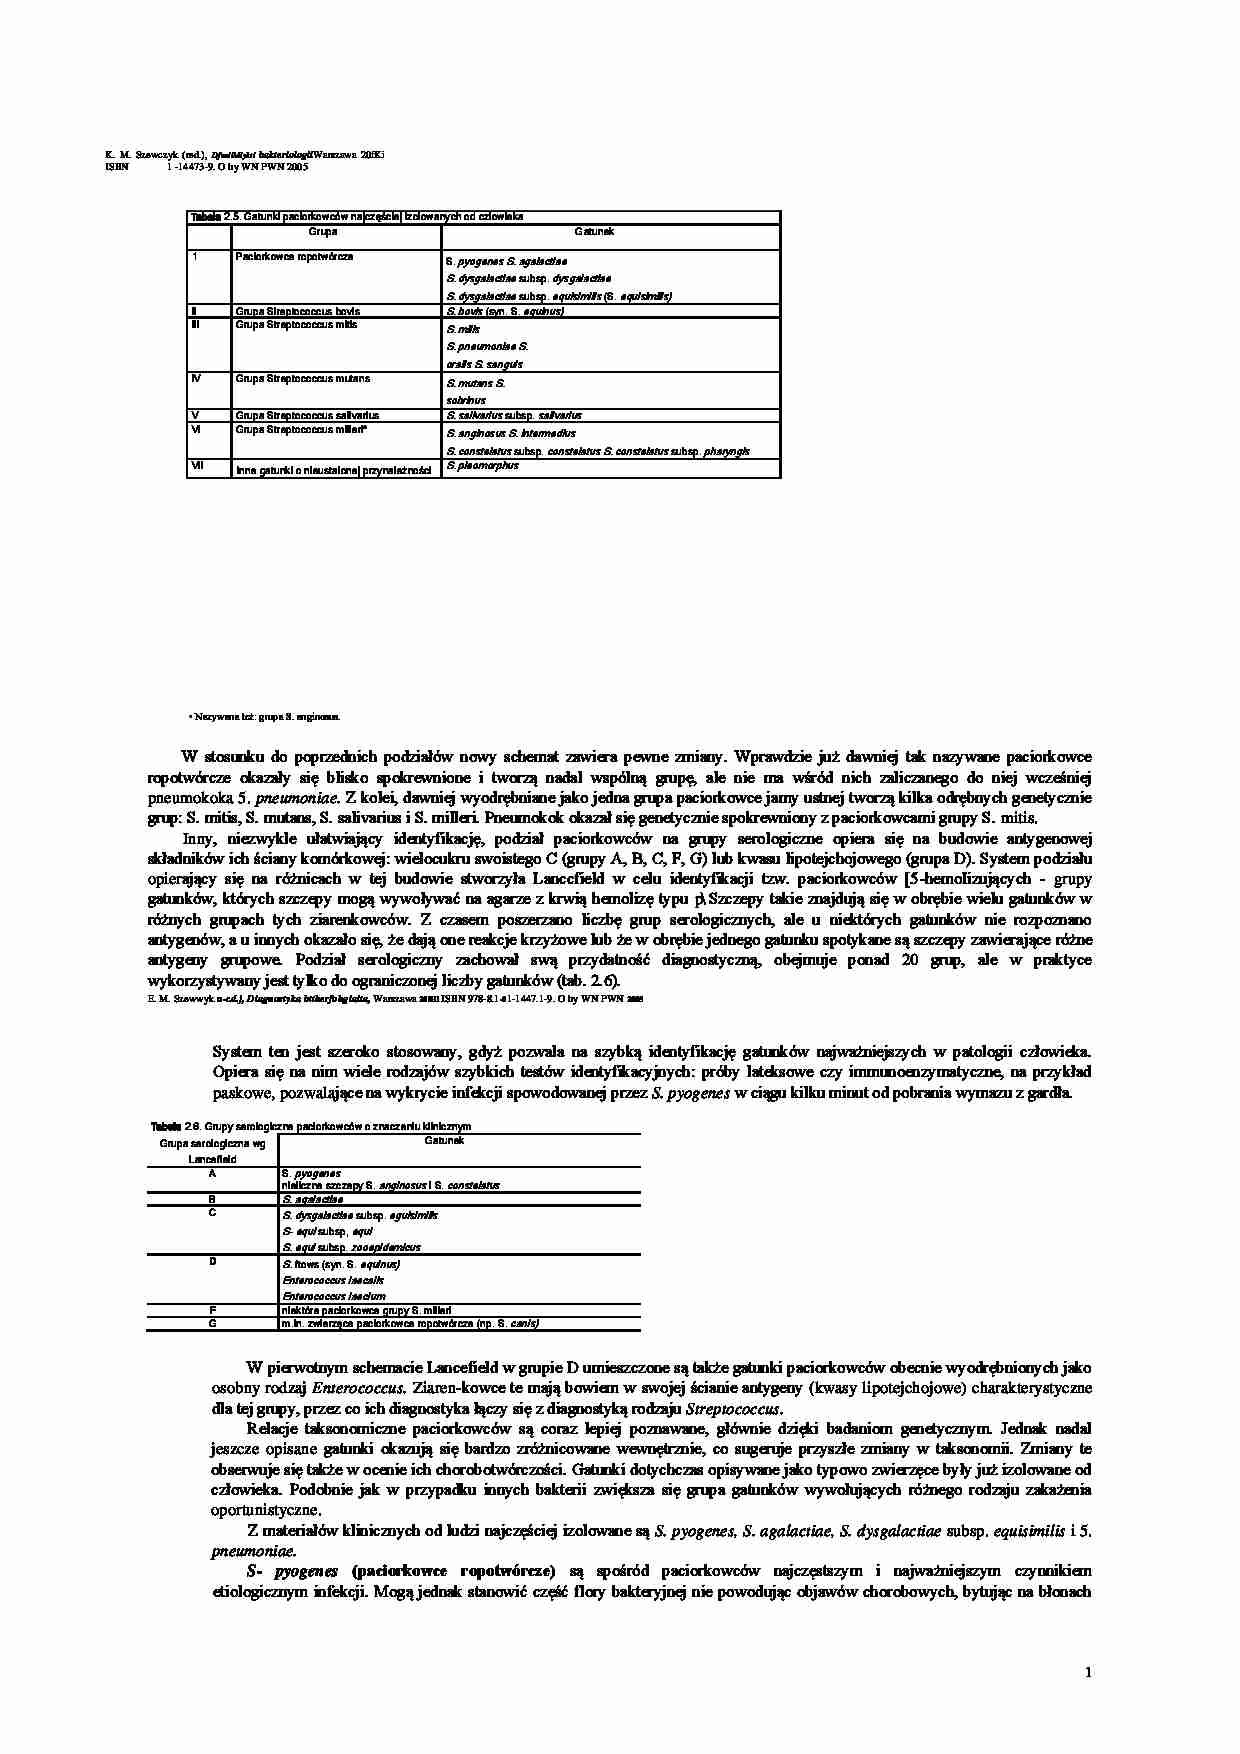 Mikrobiologia lekarska - paciorkowce - strona 1